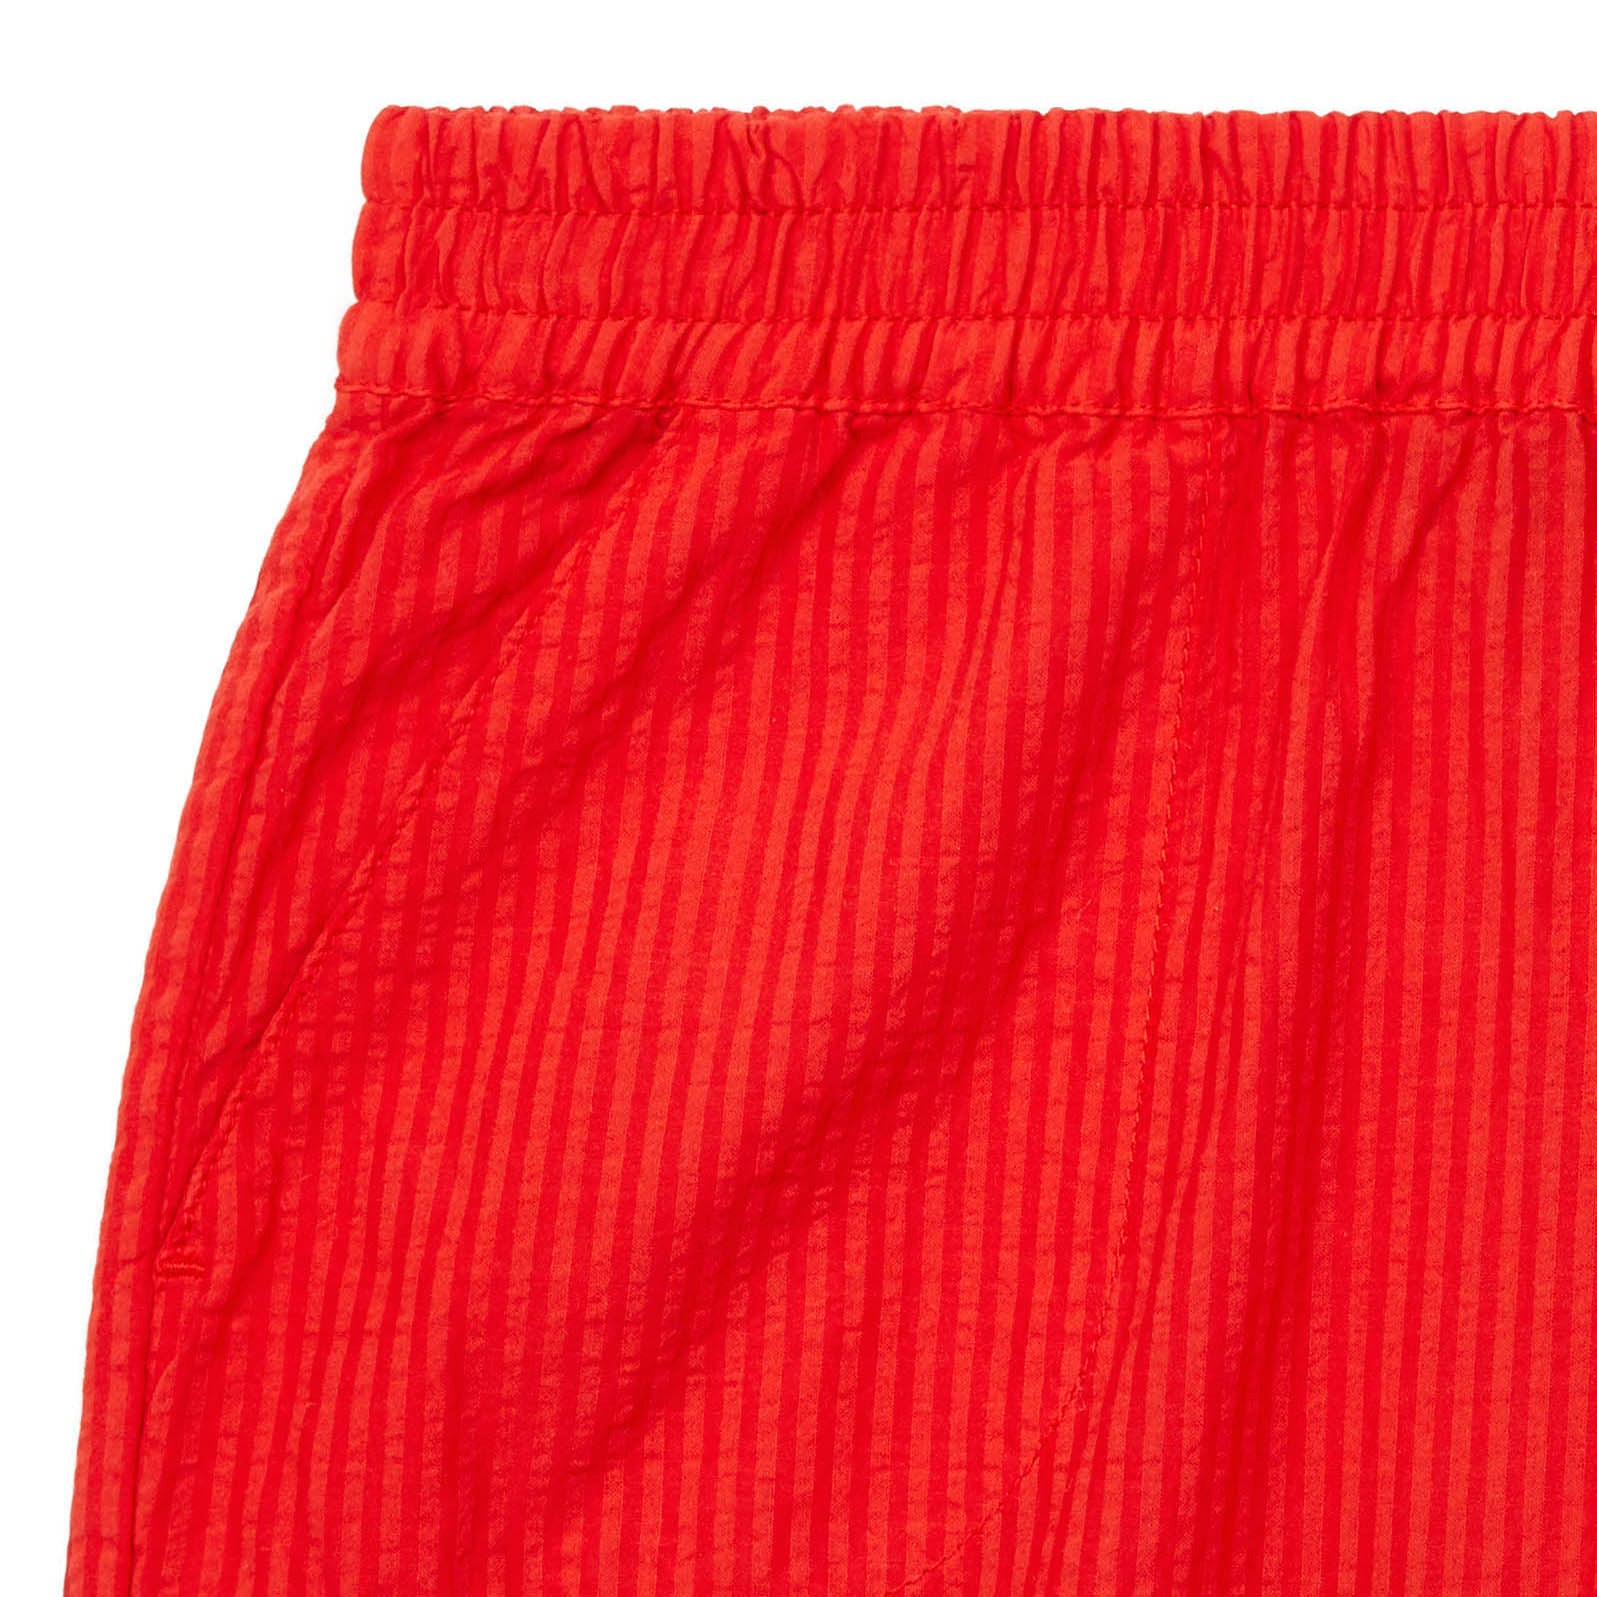 Boys & Girls Red Cotton Short